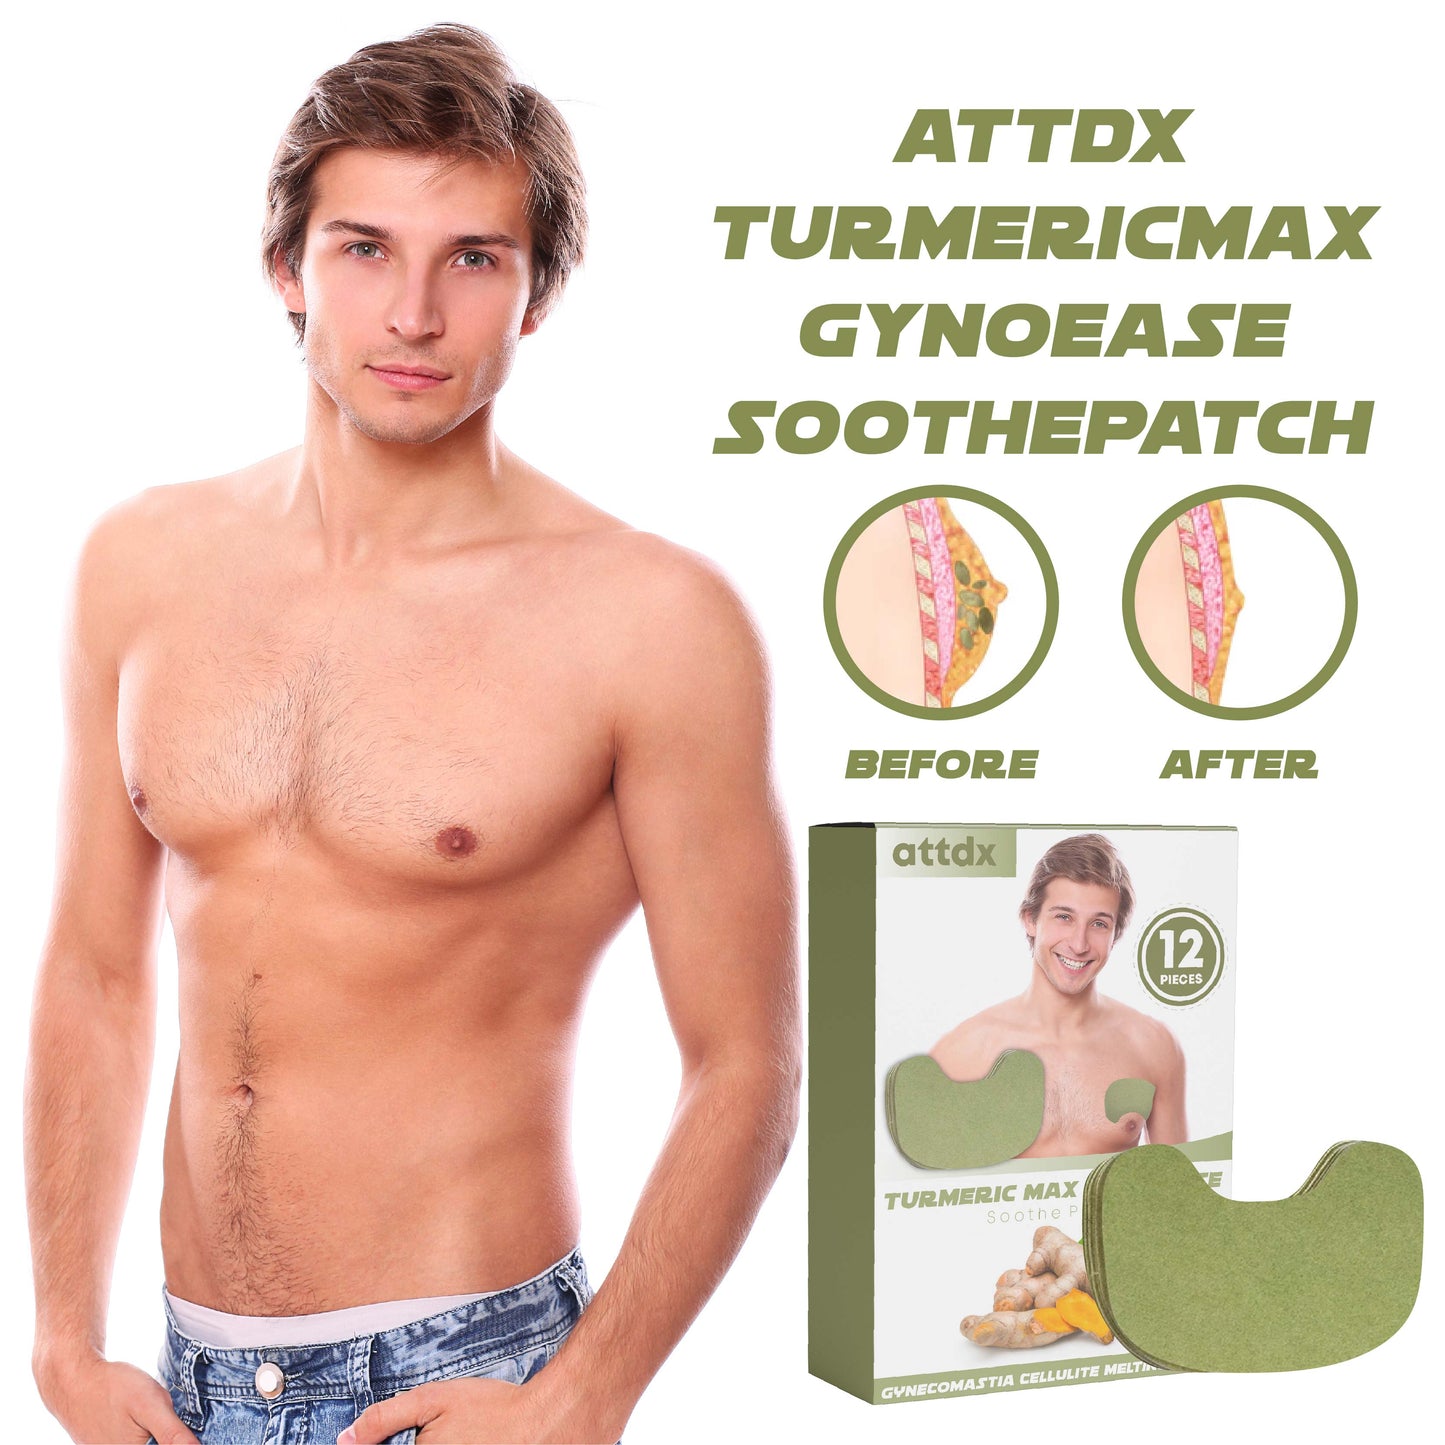 ATTDX TurmericMax GynoEase SoothePatch